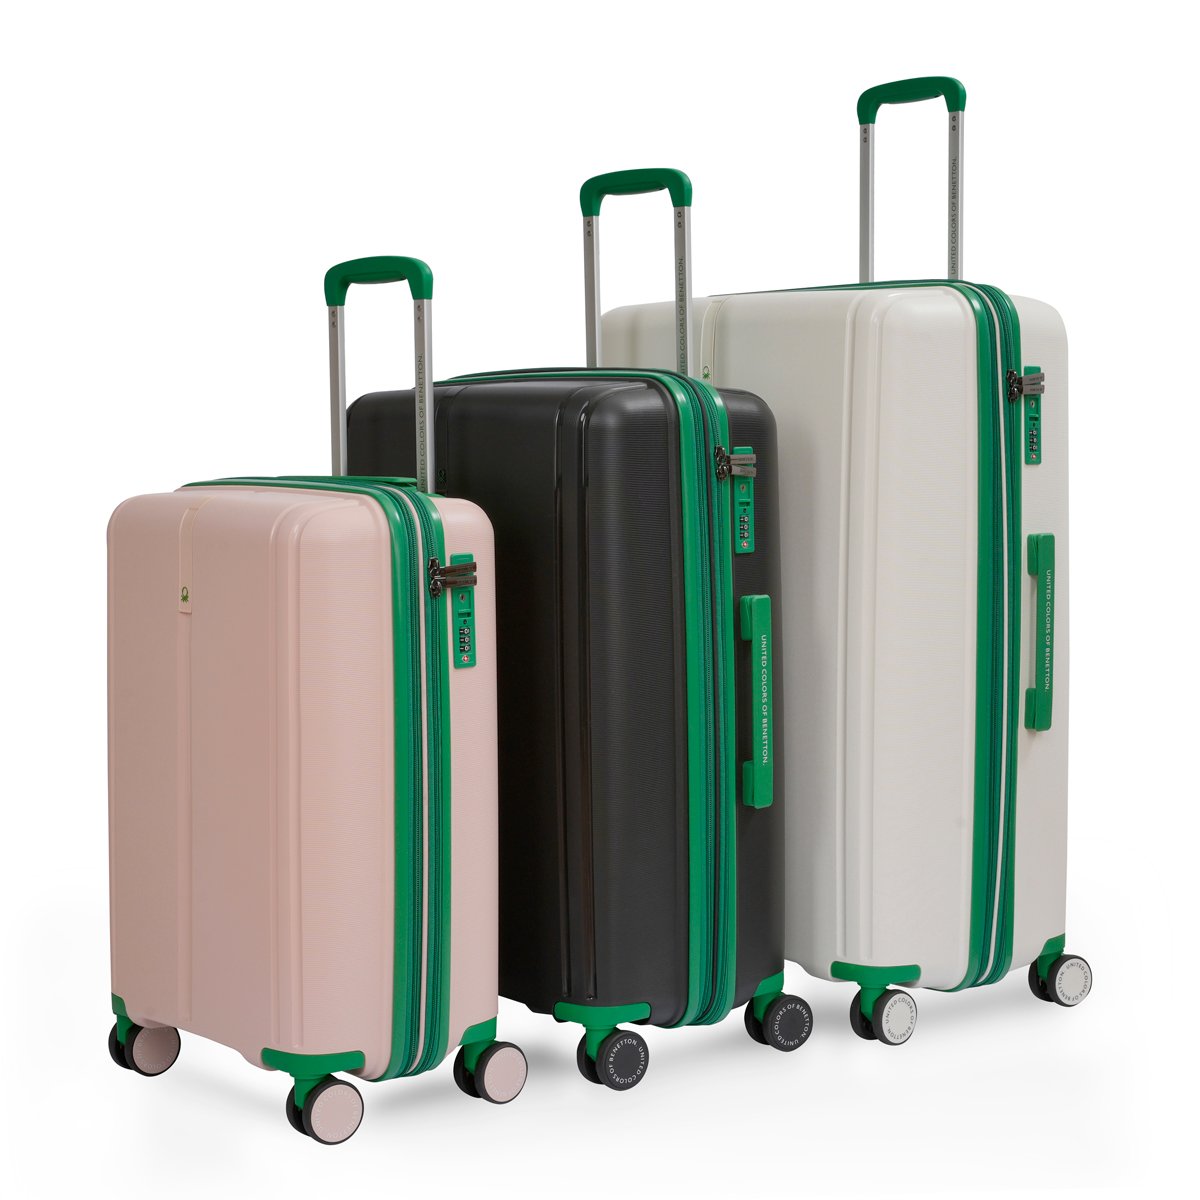 United Colors of Benetton Emerald Hard Luggage white